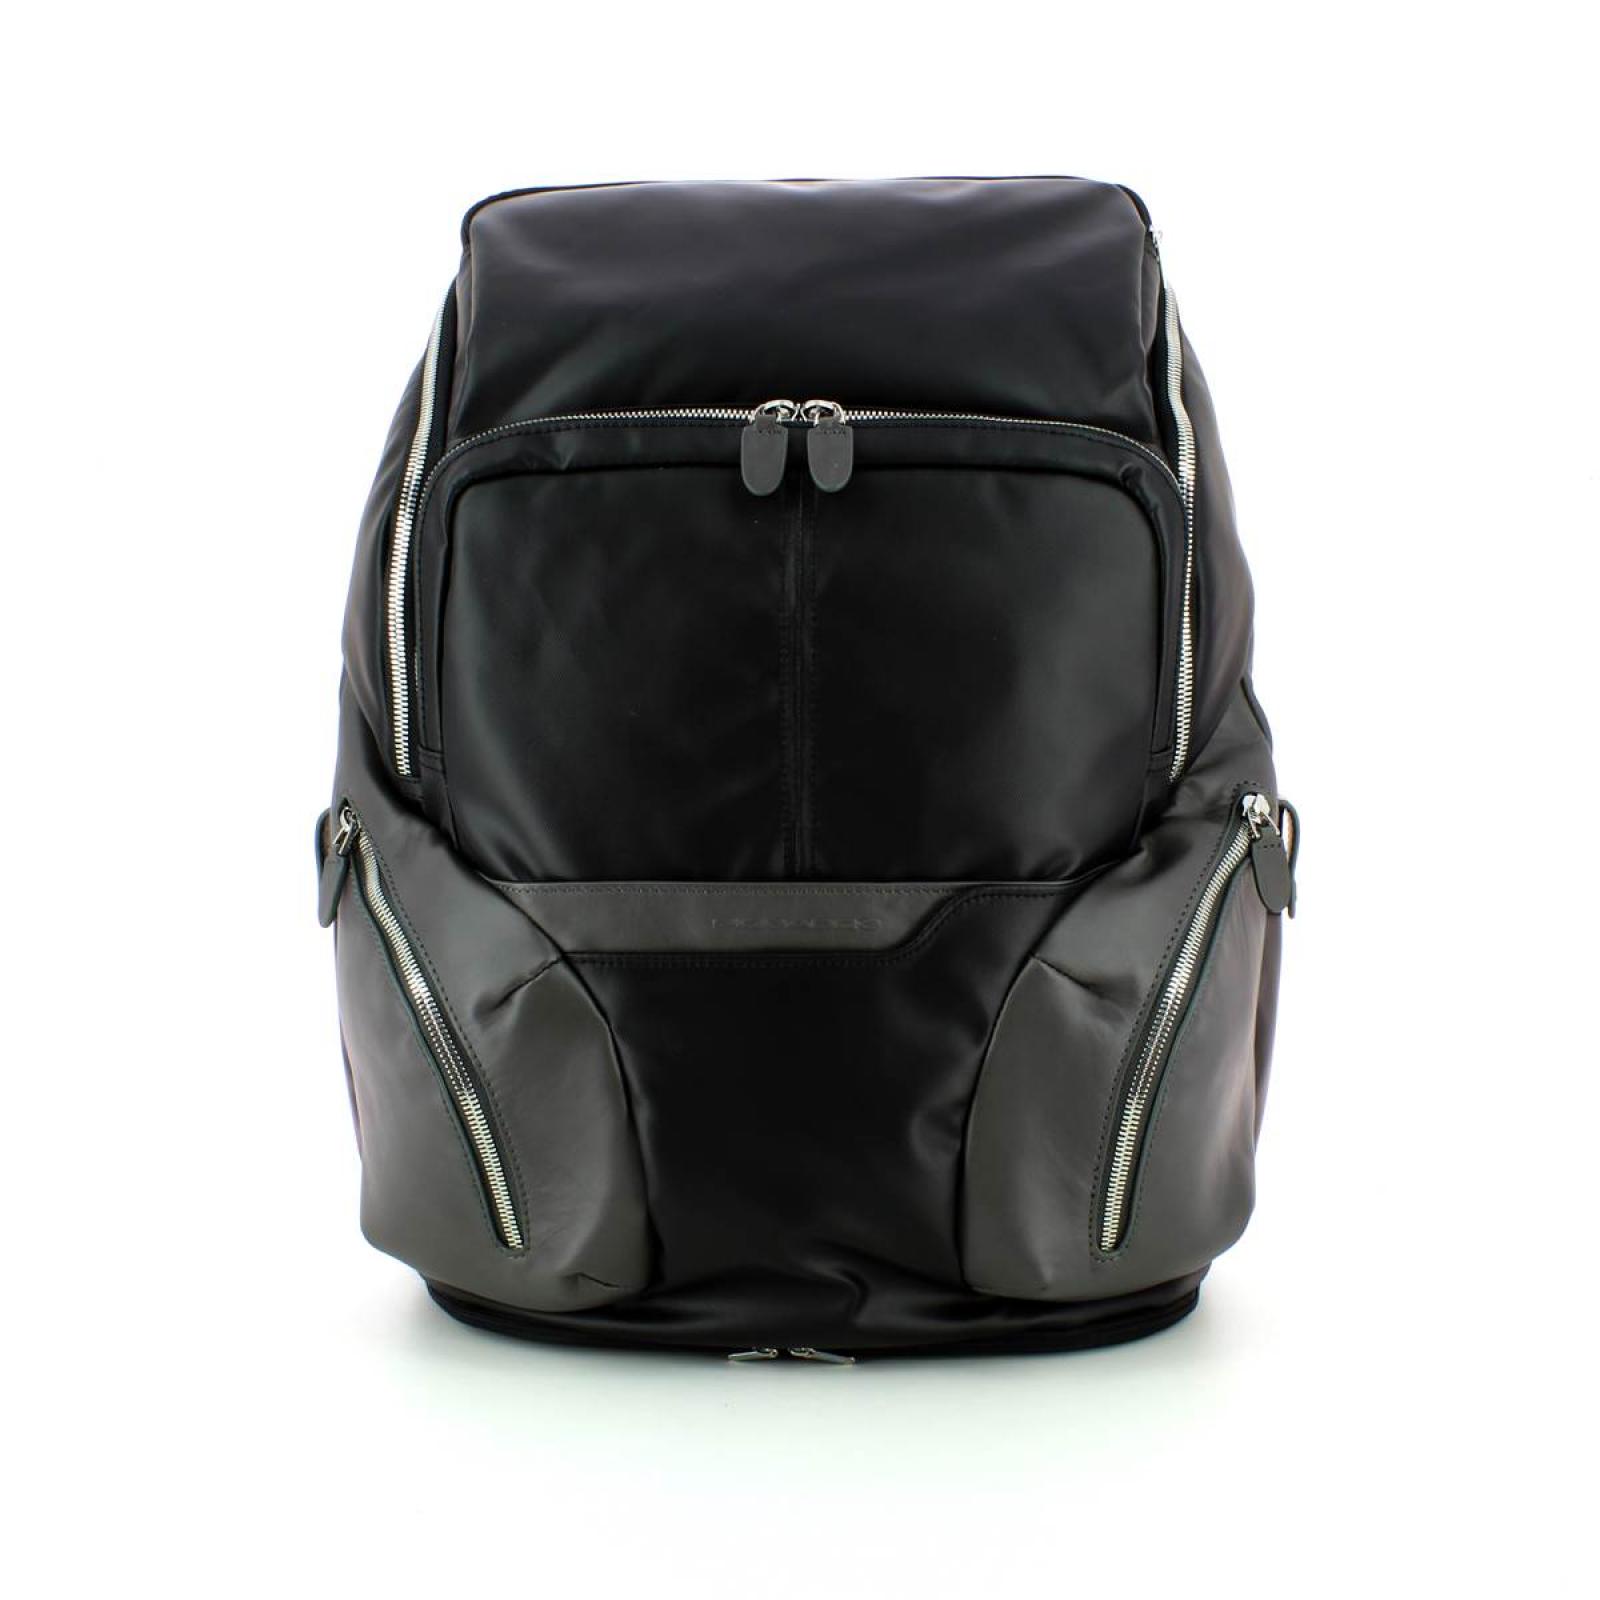 Backpack ESPANDIBILE COLEOS 3773OS